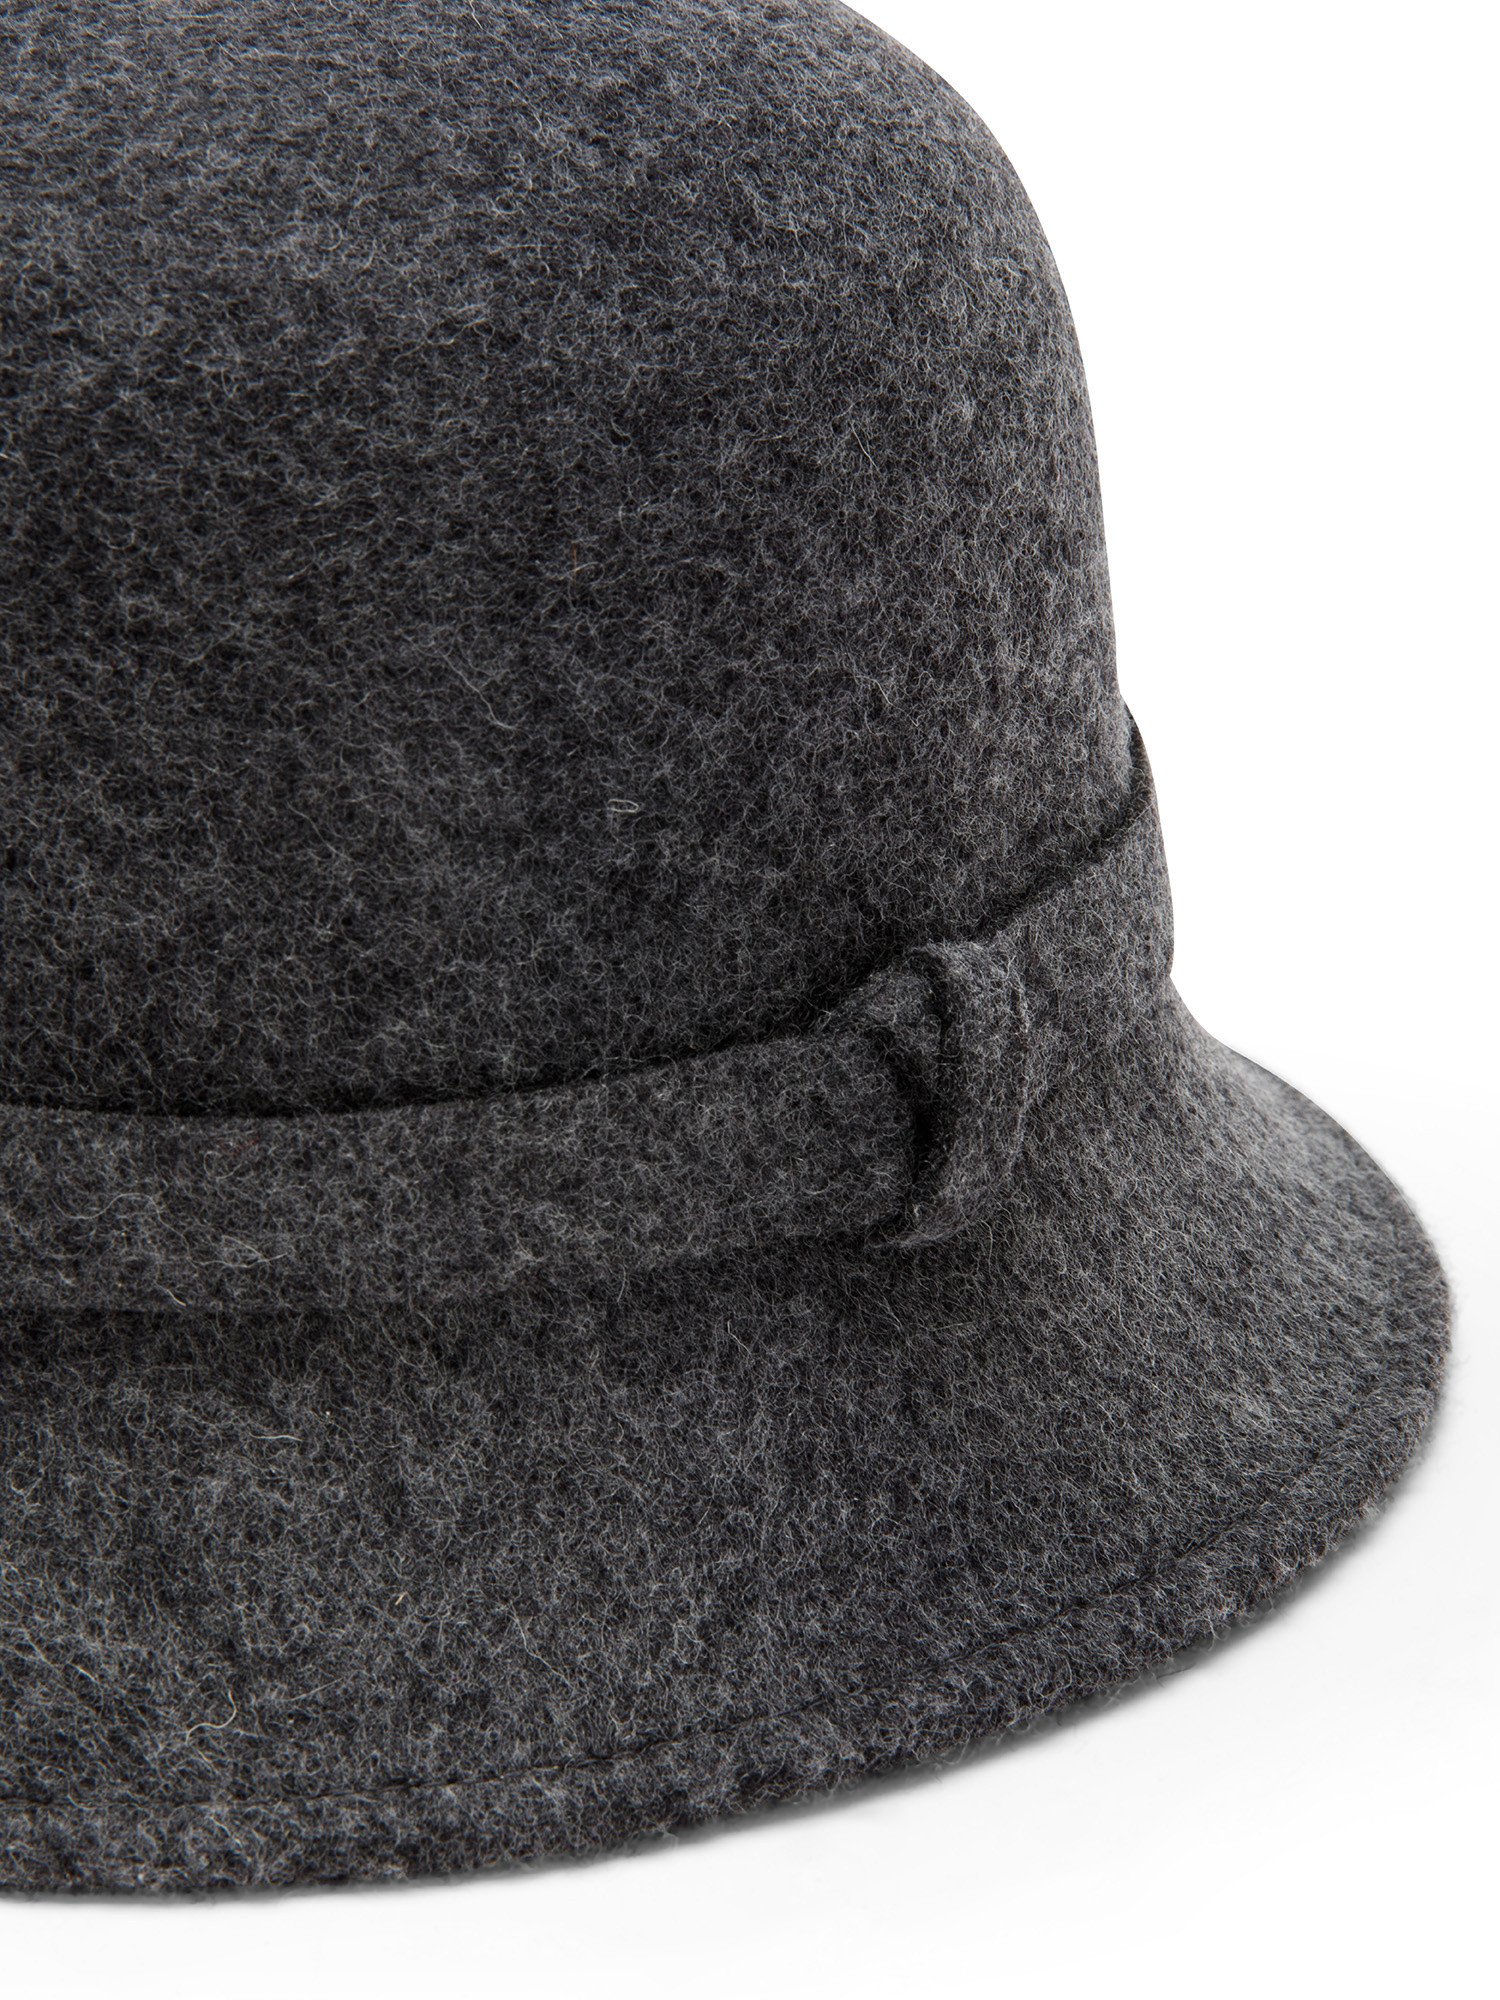 Koan - Hat with felt strap, Grey, large image number 1